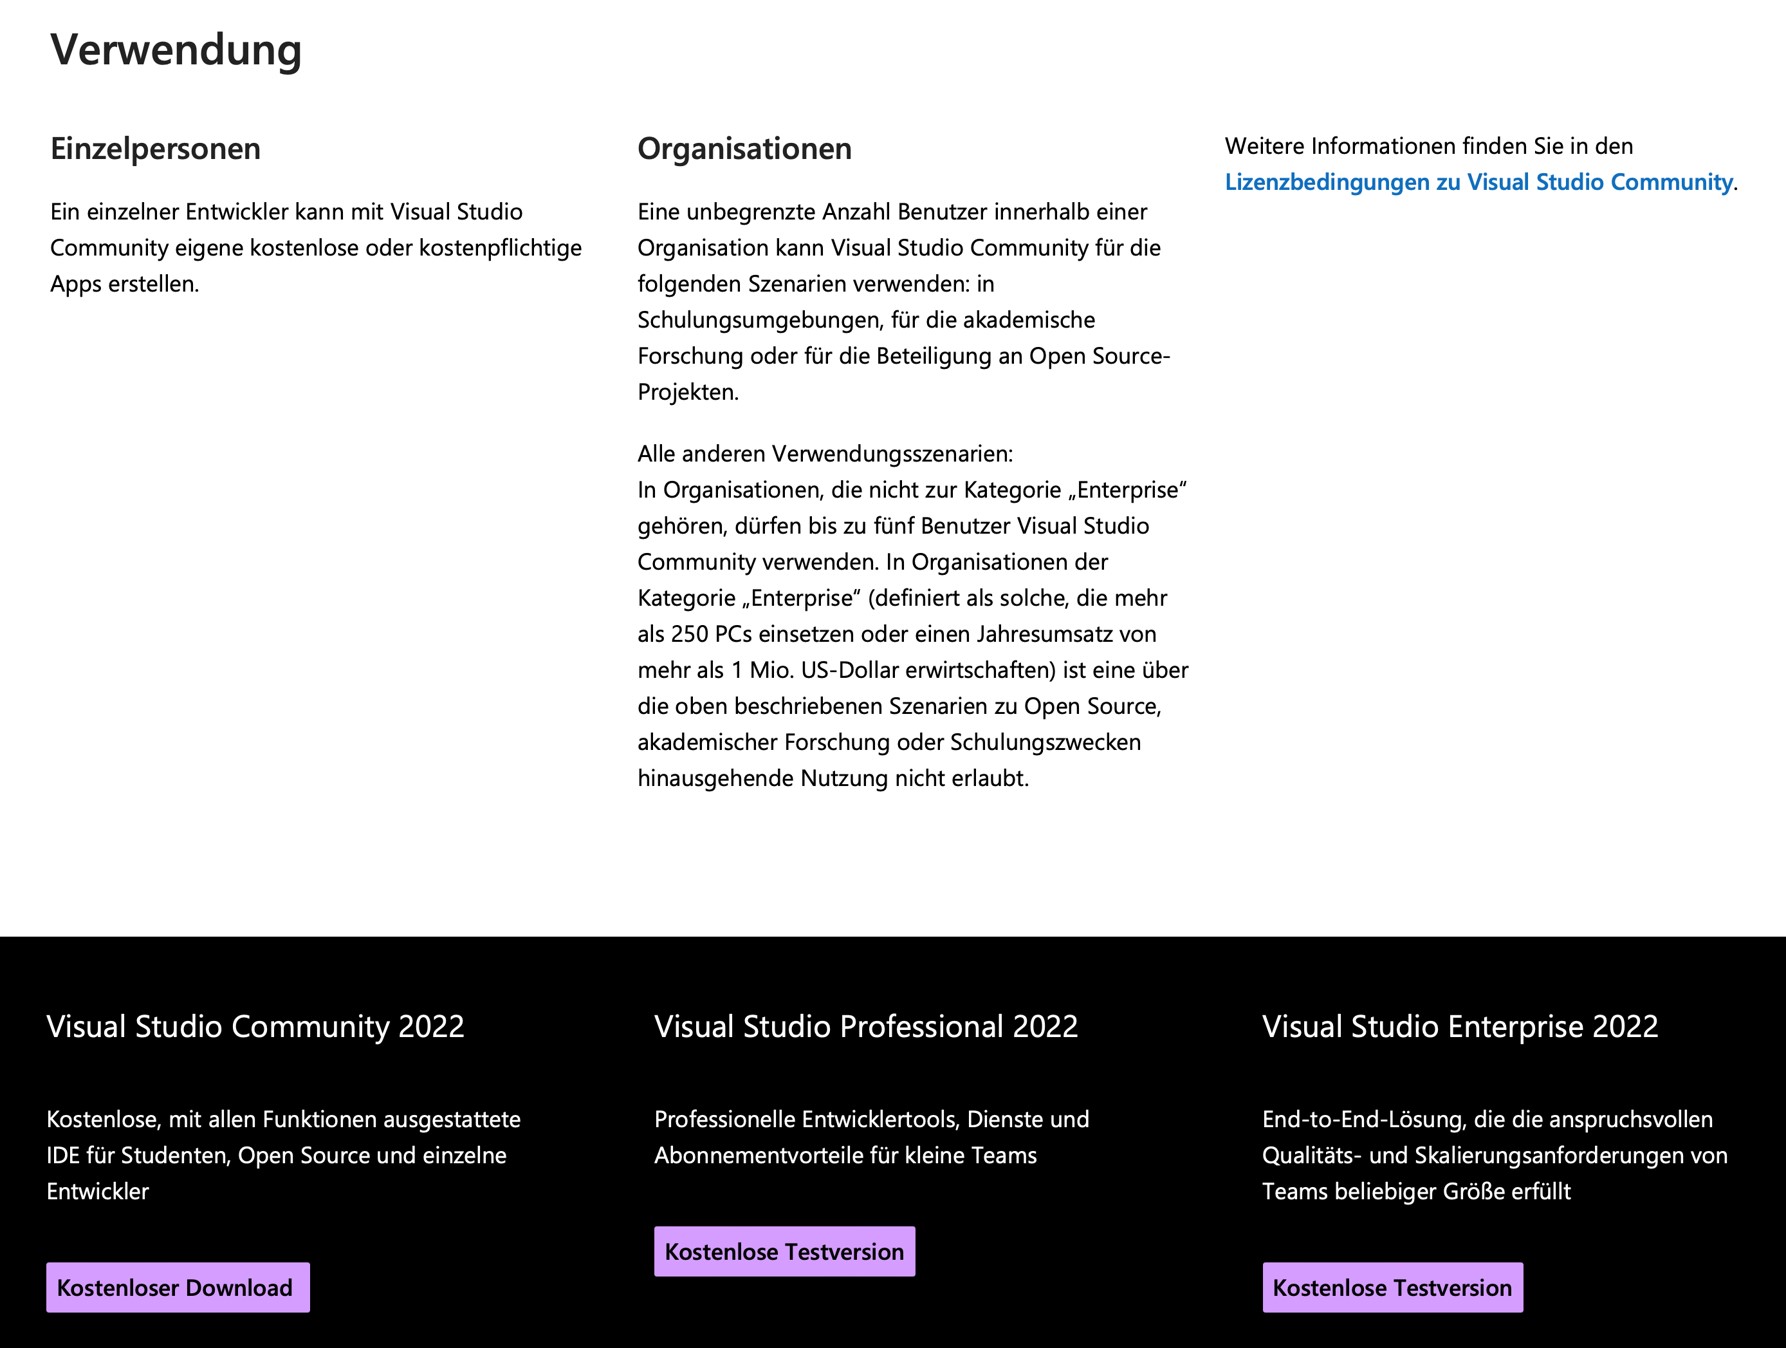 Microsoft VirtualStudio Communitiy Edition